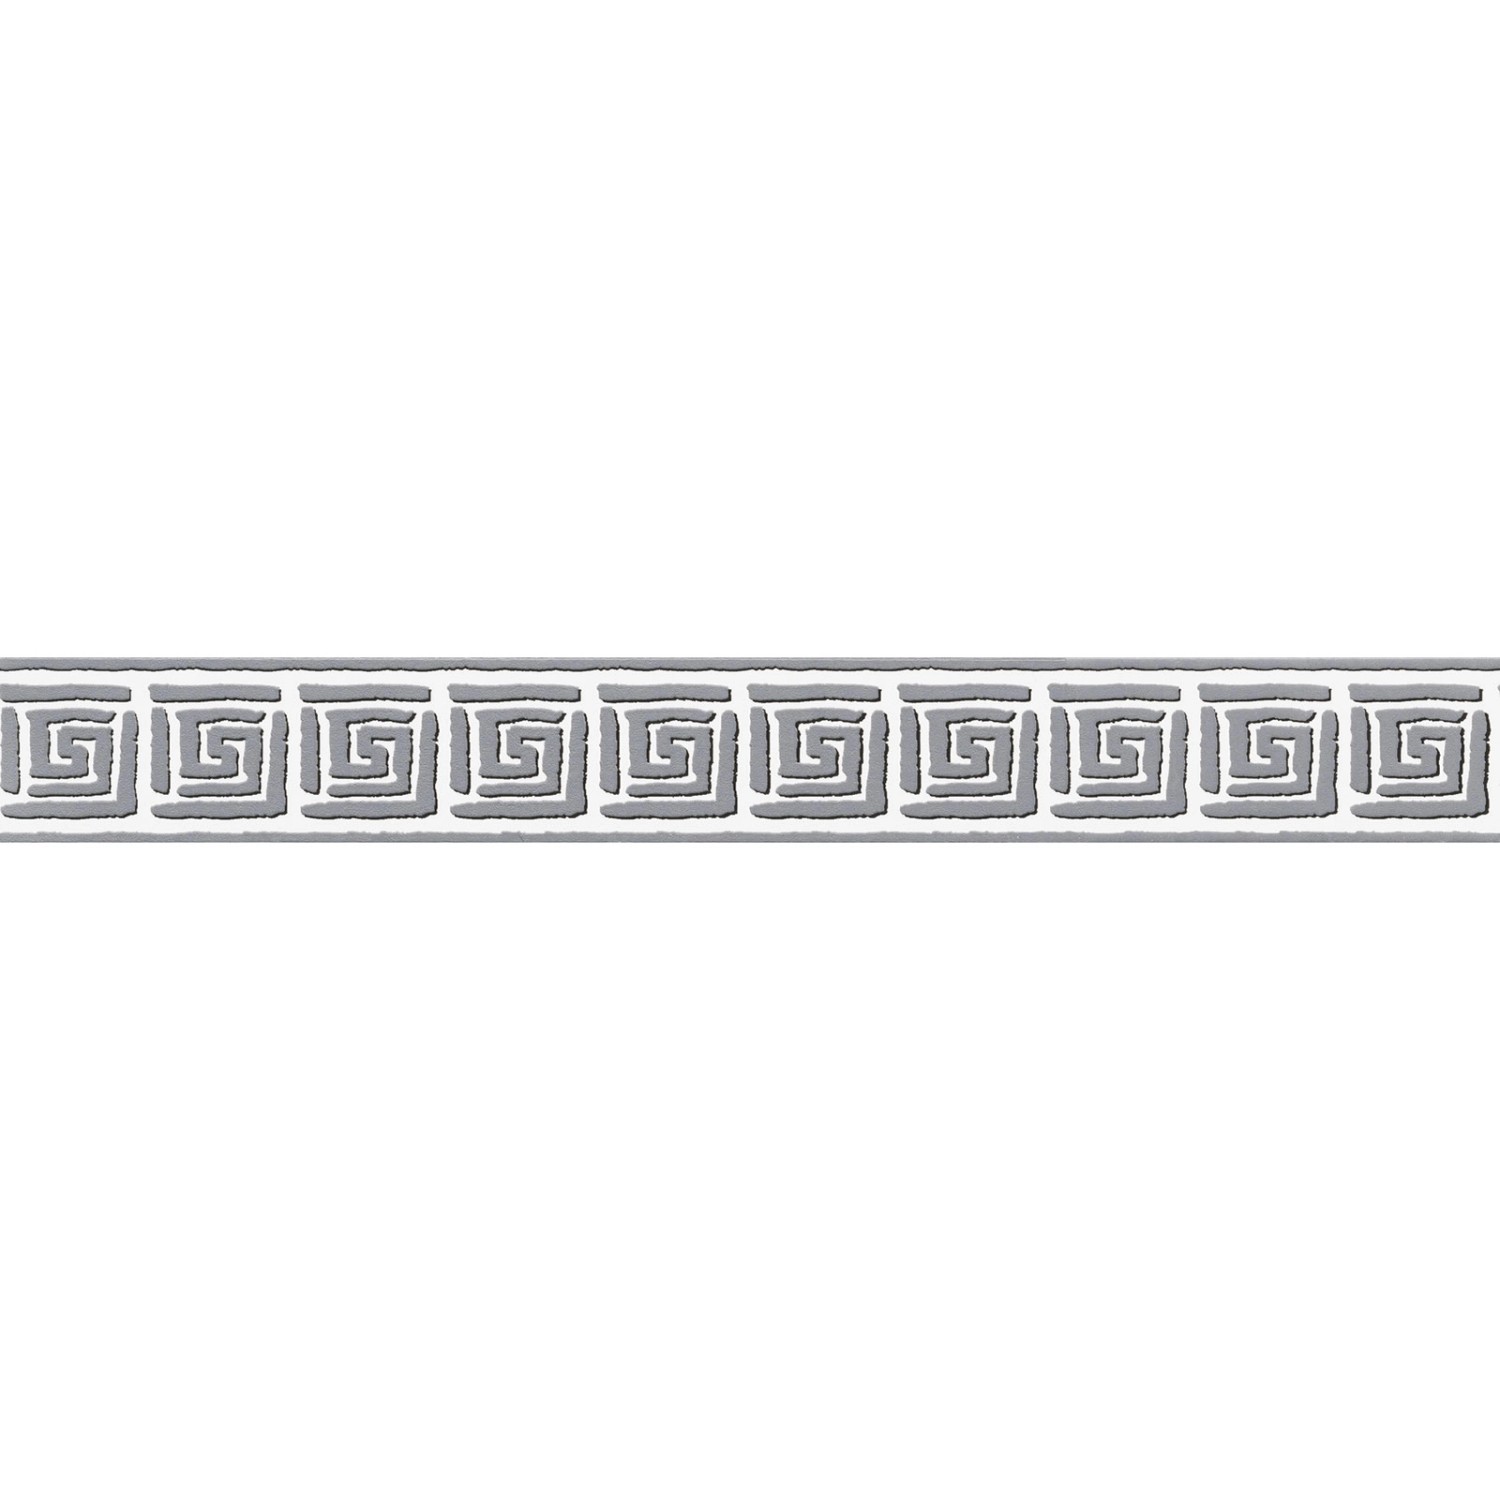 Bricoflor Mäander Tapeten Bordüre Selbstklebende Tapetenbordüre im antiken günstig online kaufen